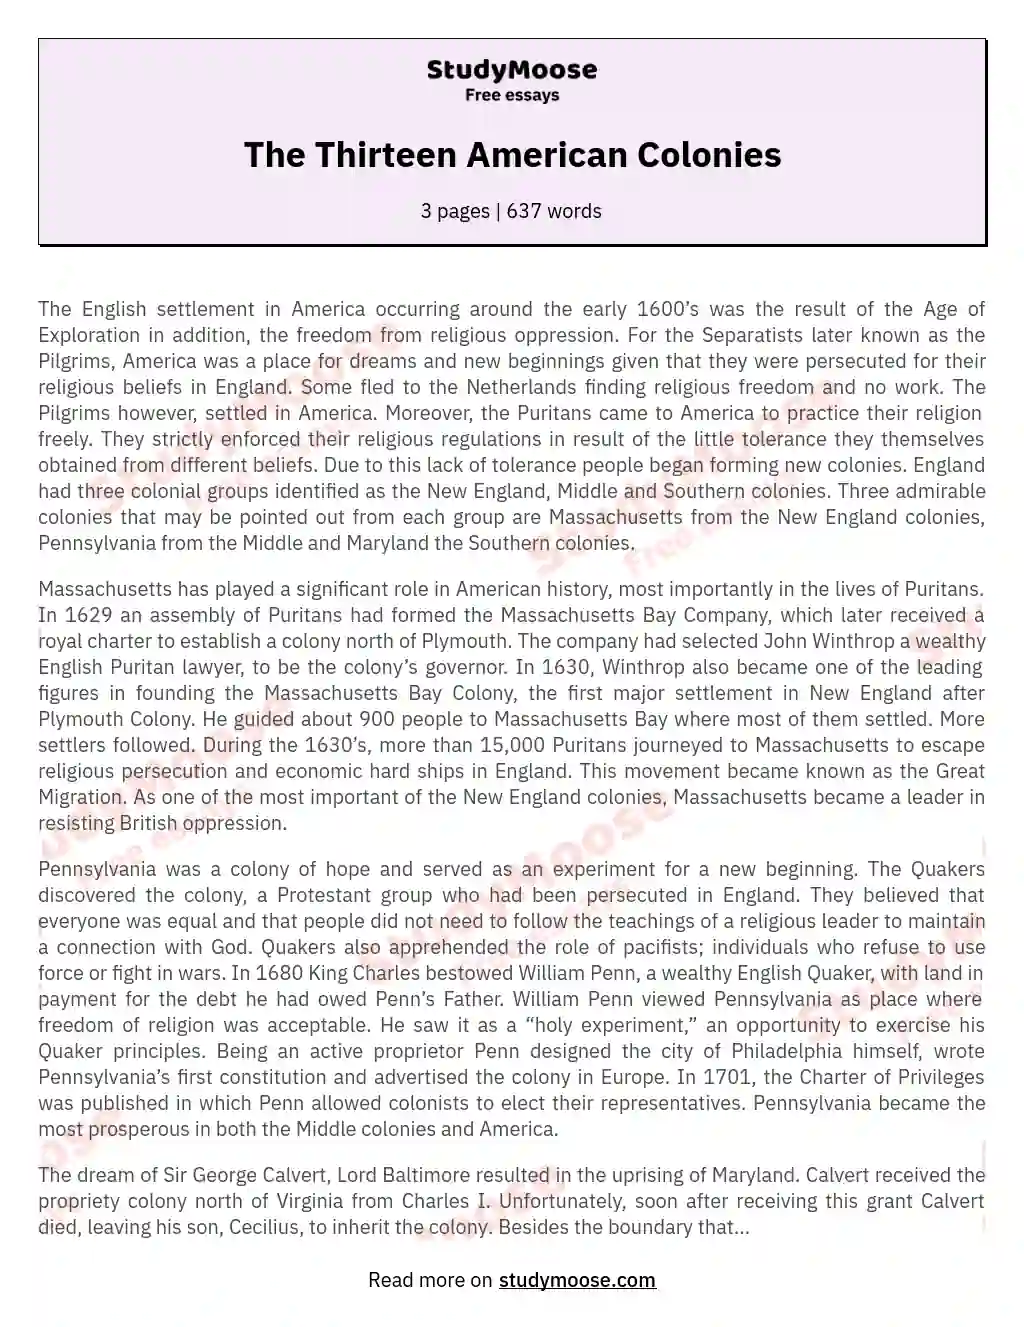 The Thirteen American Colonies essay